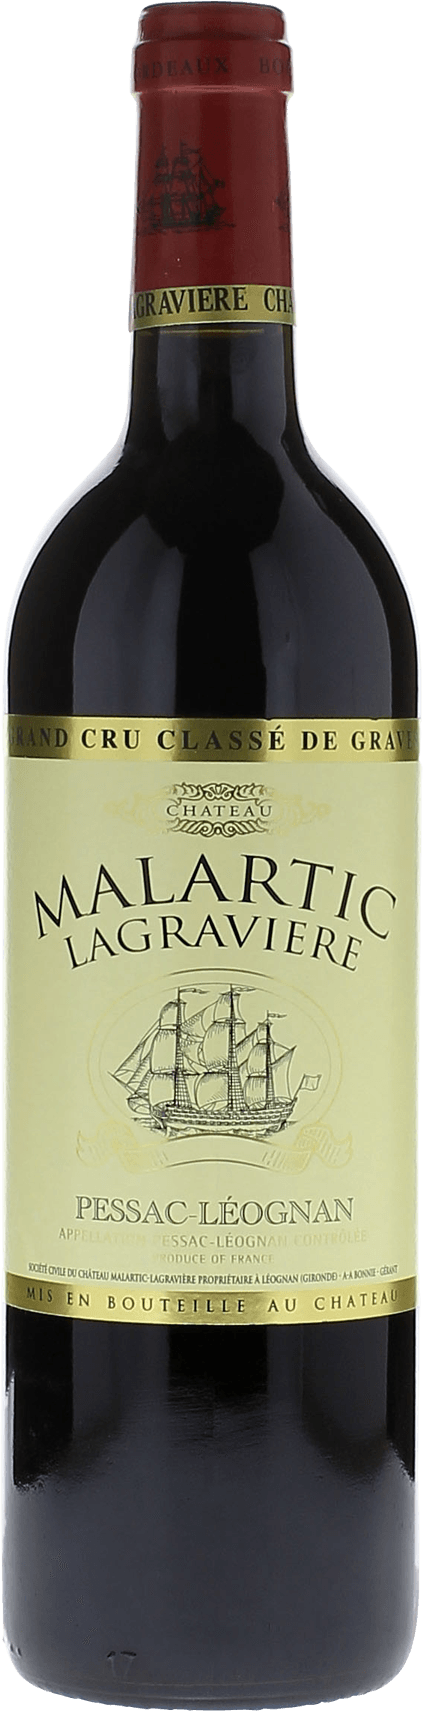 Malartic lagraviere rouge 2003 Grand Cru Class Graves, Bordeaux rouge